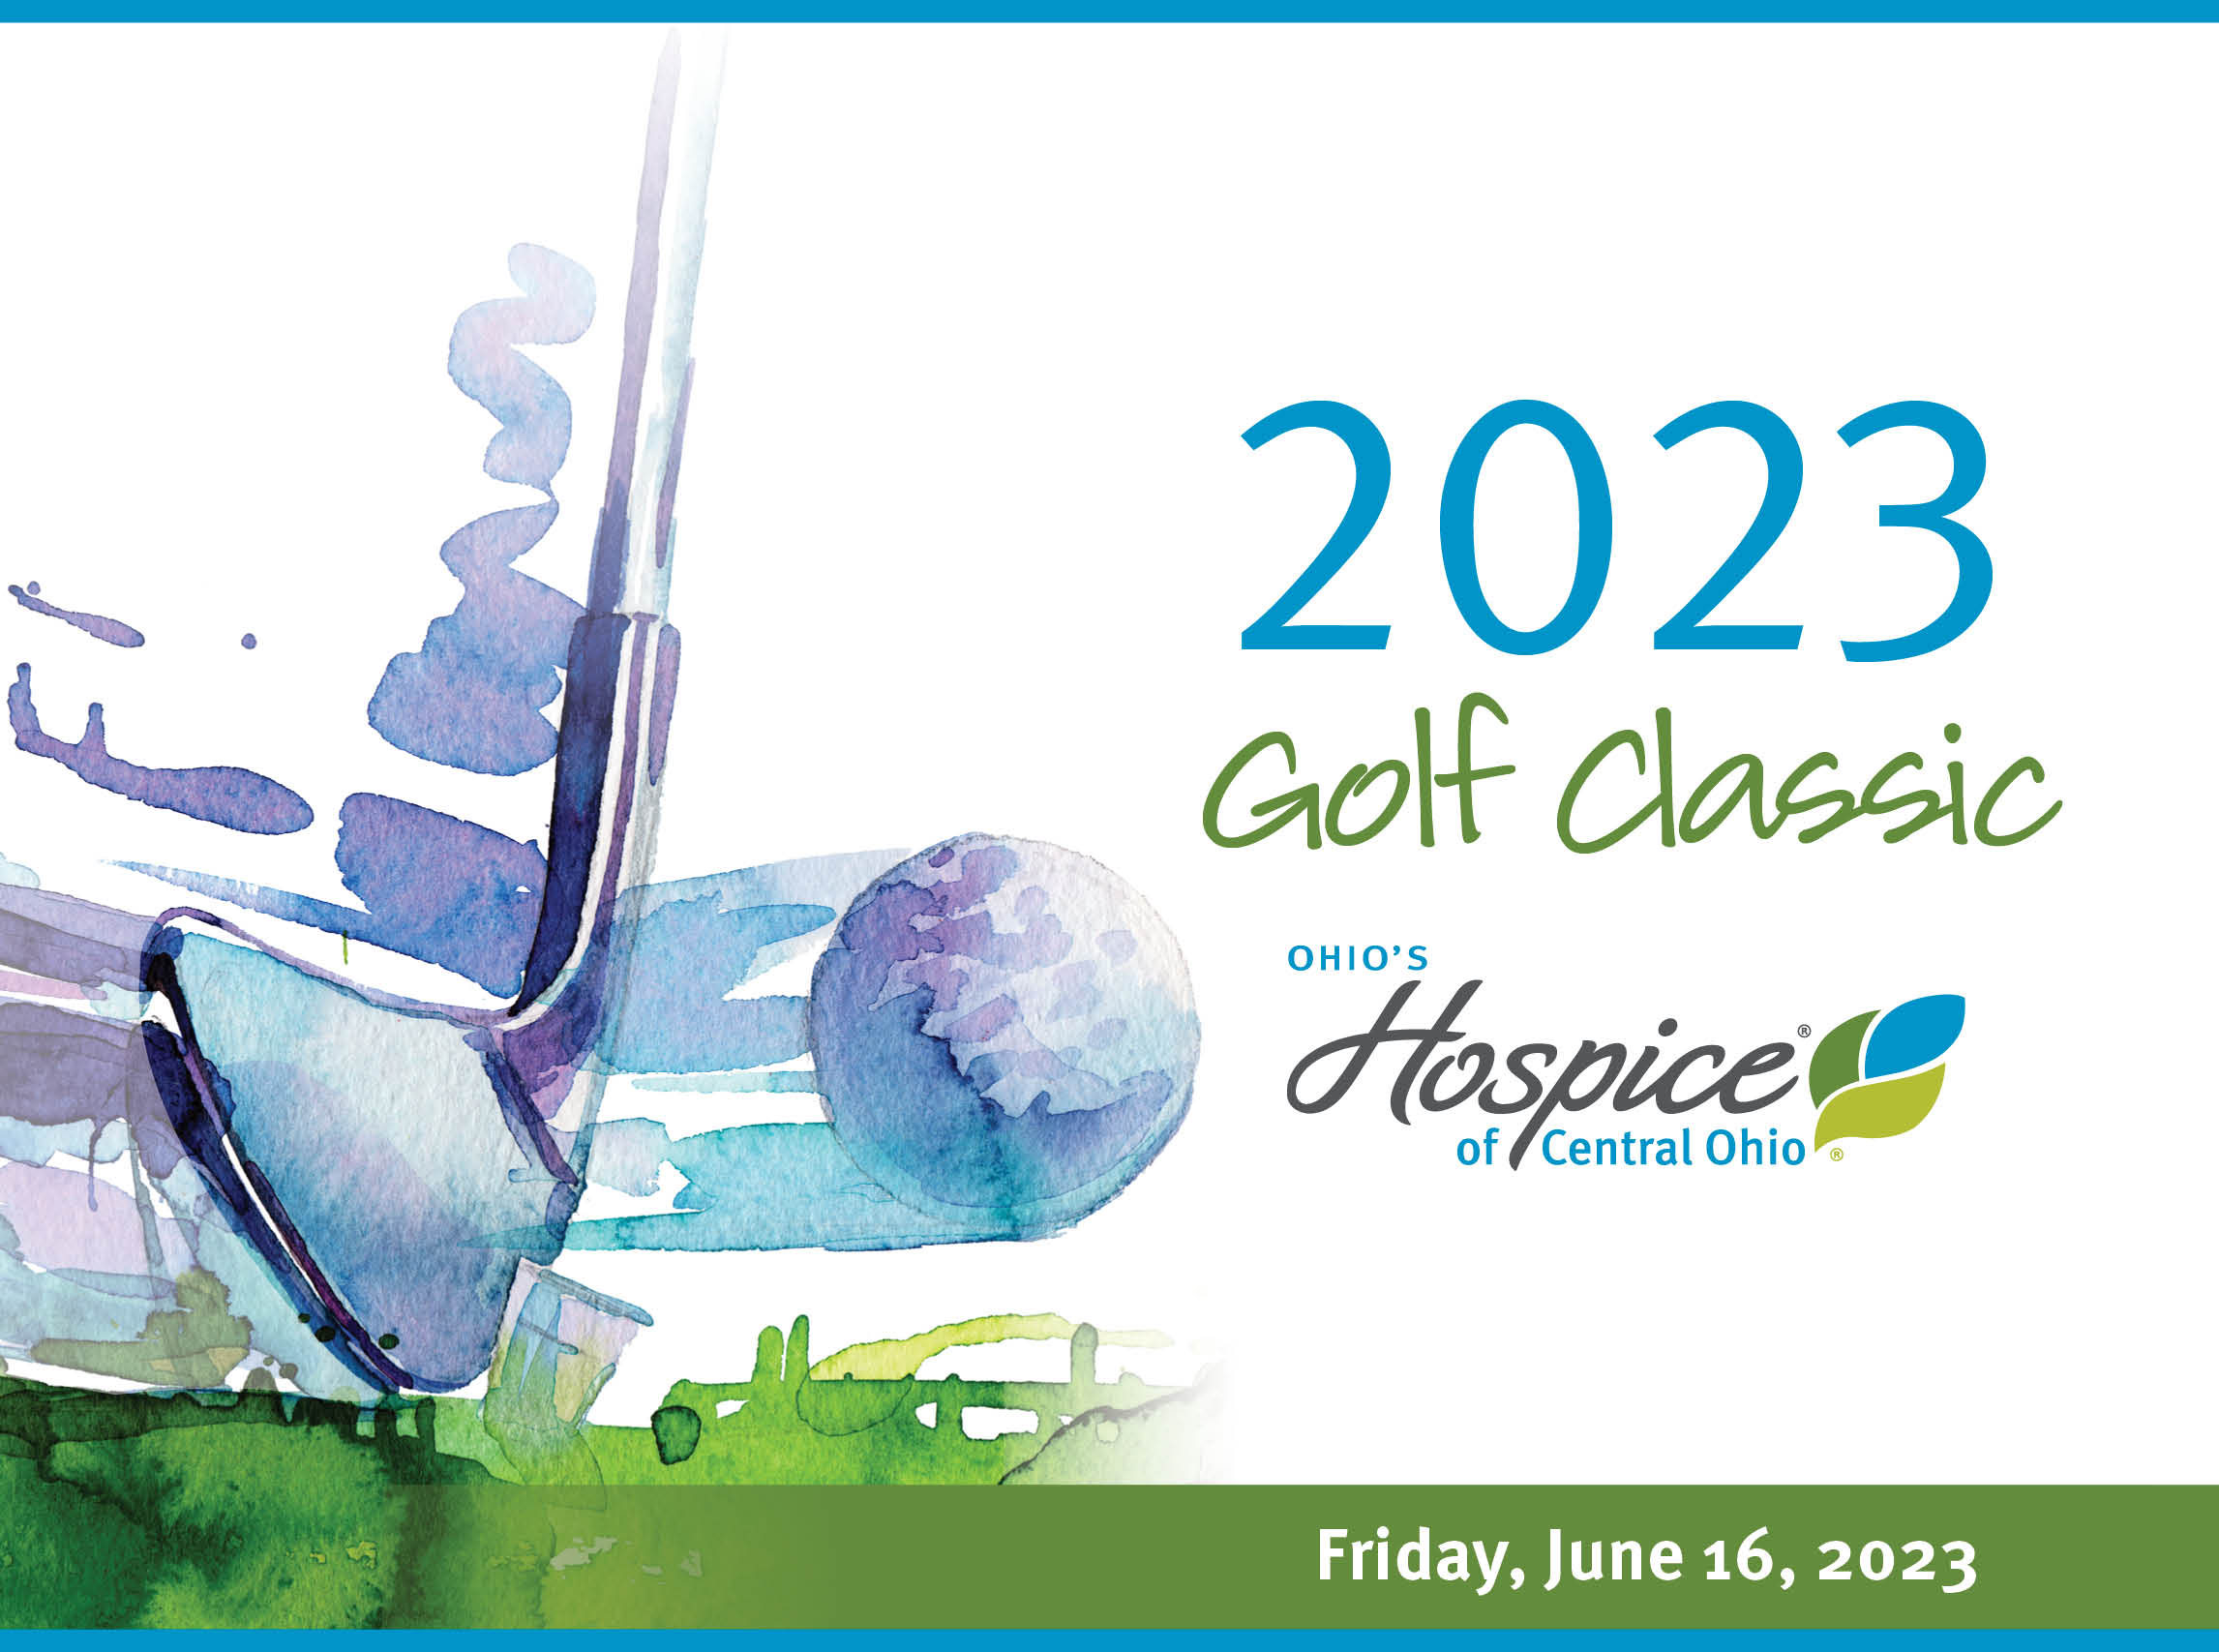 2023 Golf Classic. Friday, June 16, 2023. Ohio's Hospice of Central Ohio